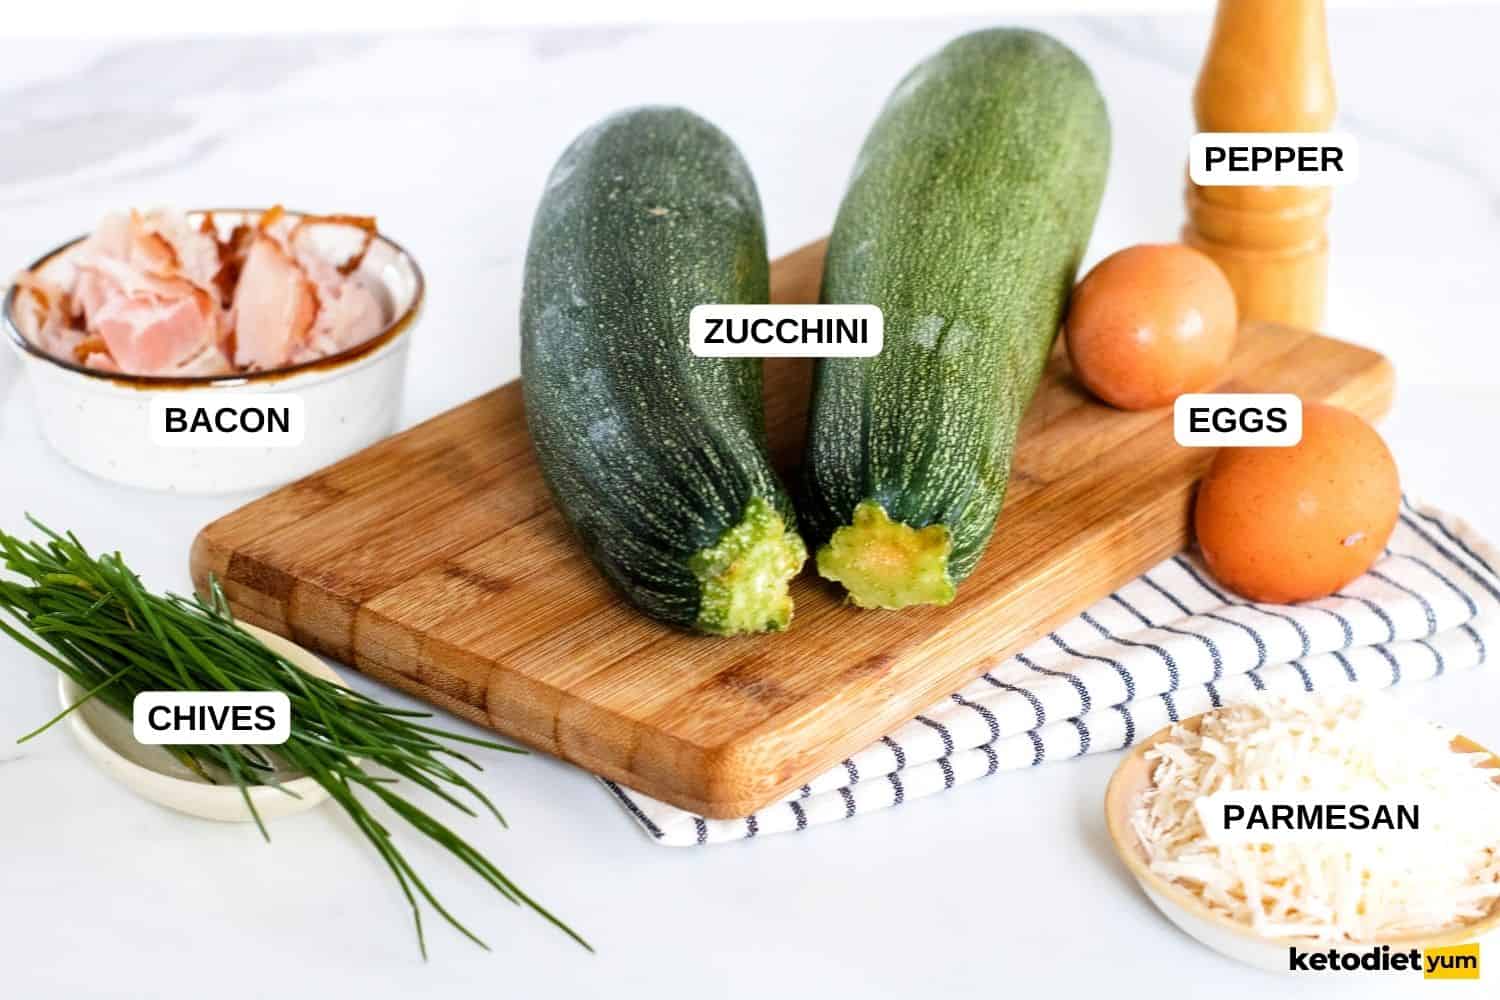 Keto Zucchini Carbonara Ingredients